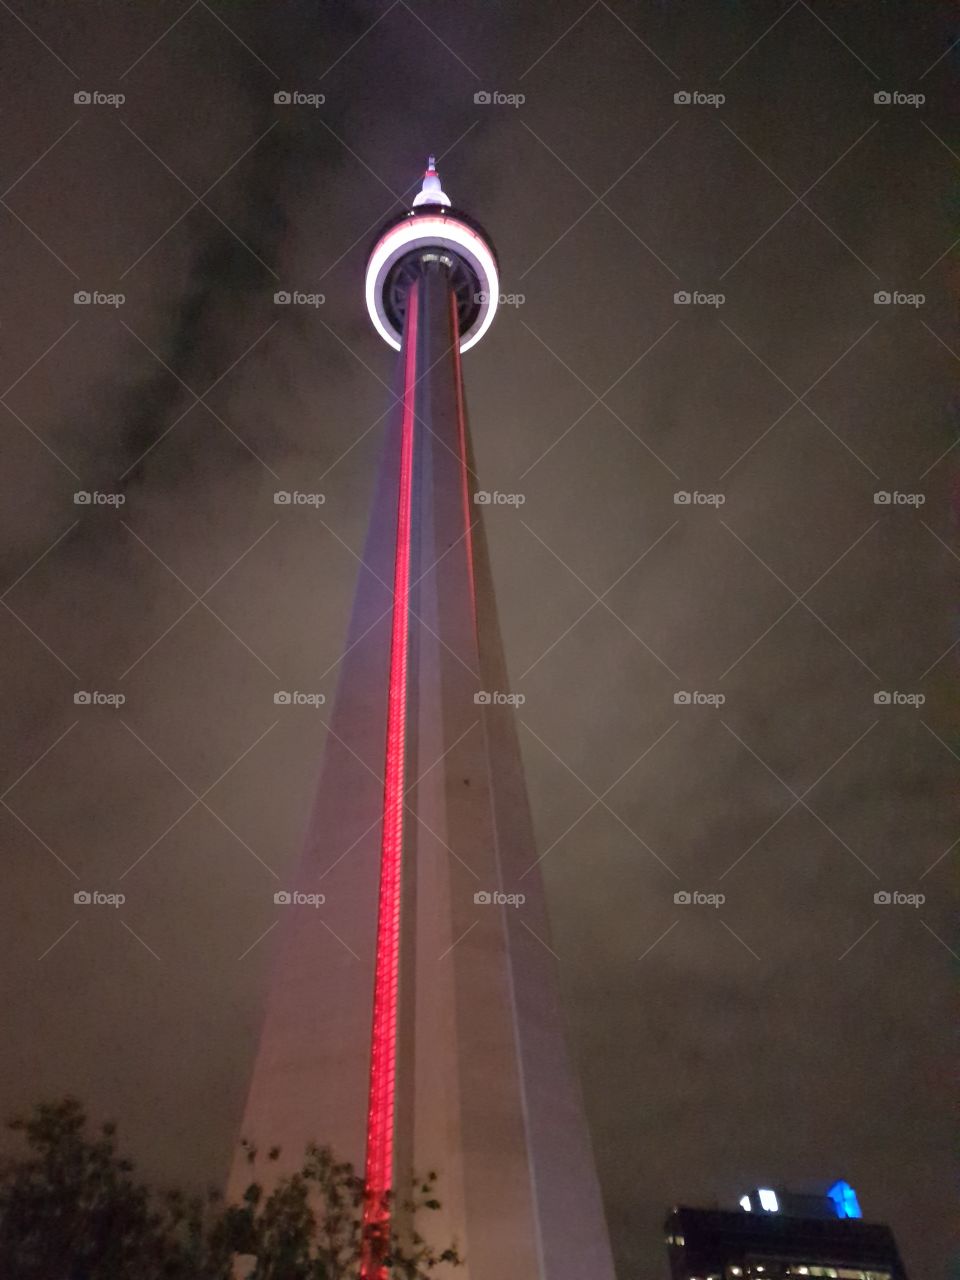 Toronto CN Tower at Night